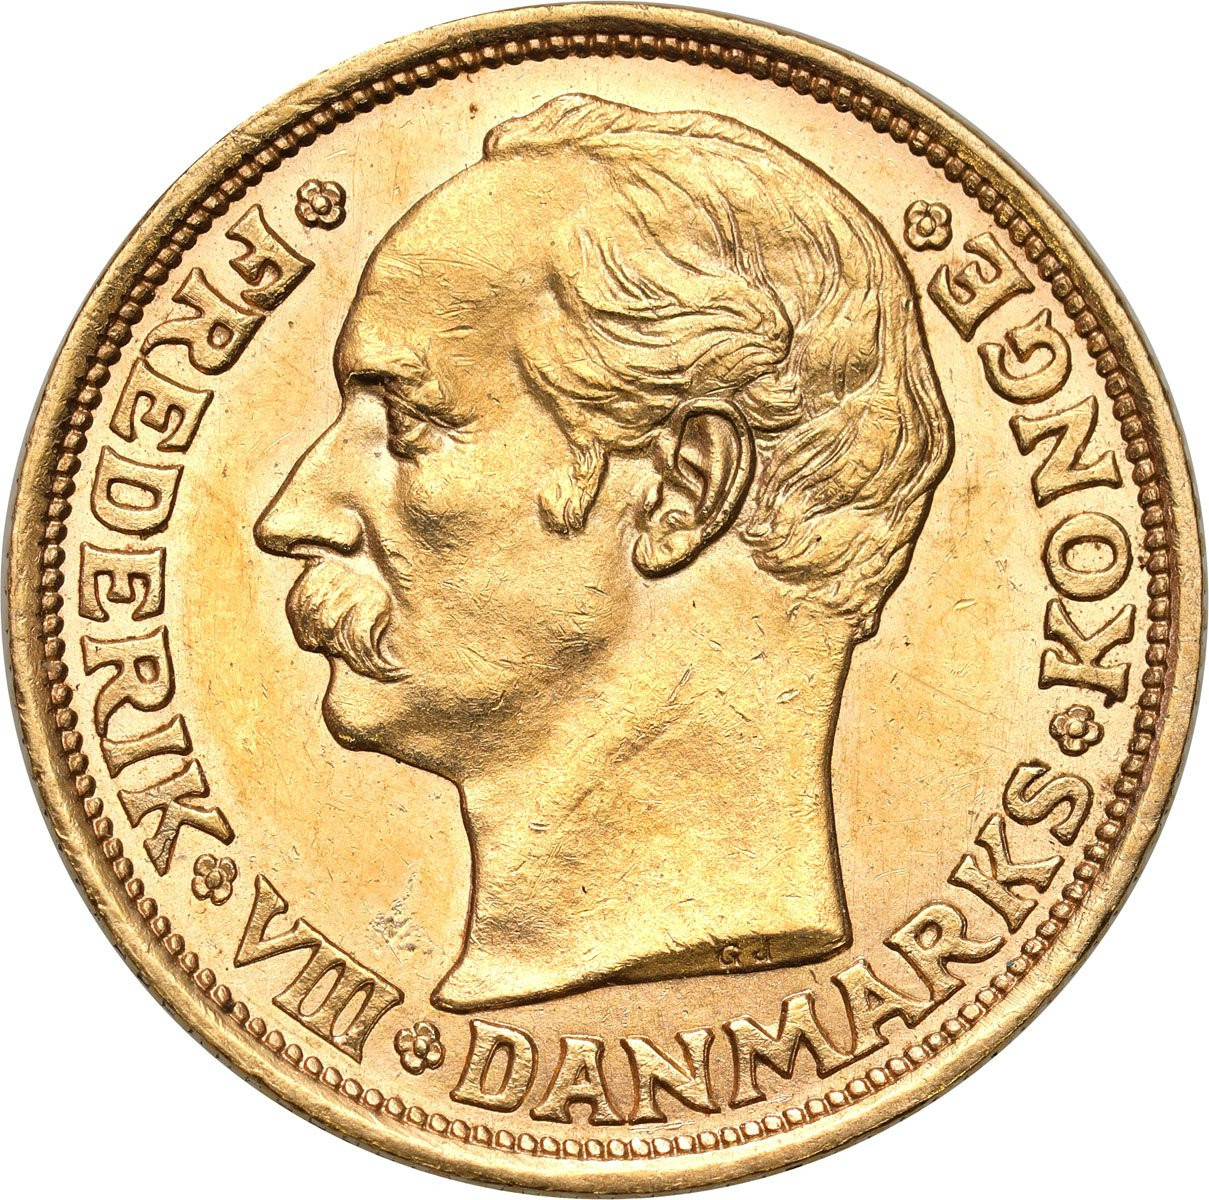 Dania. Fryderyk VIII 10 koron 1909